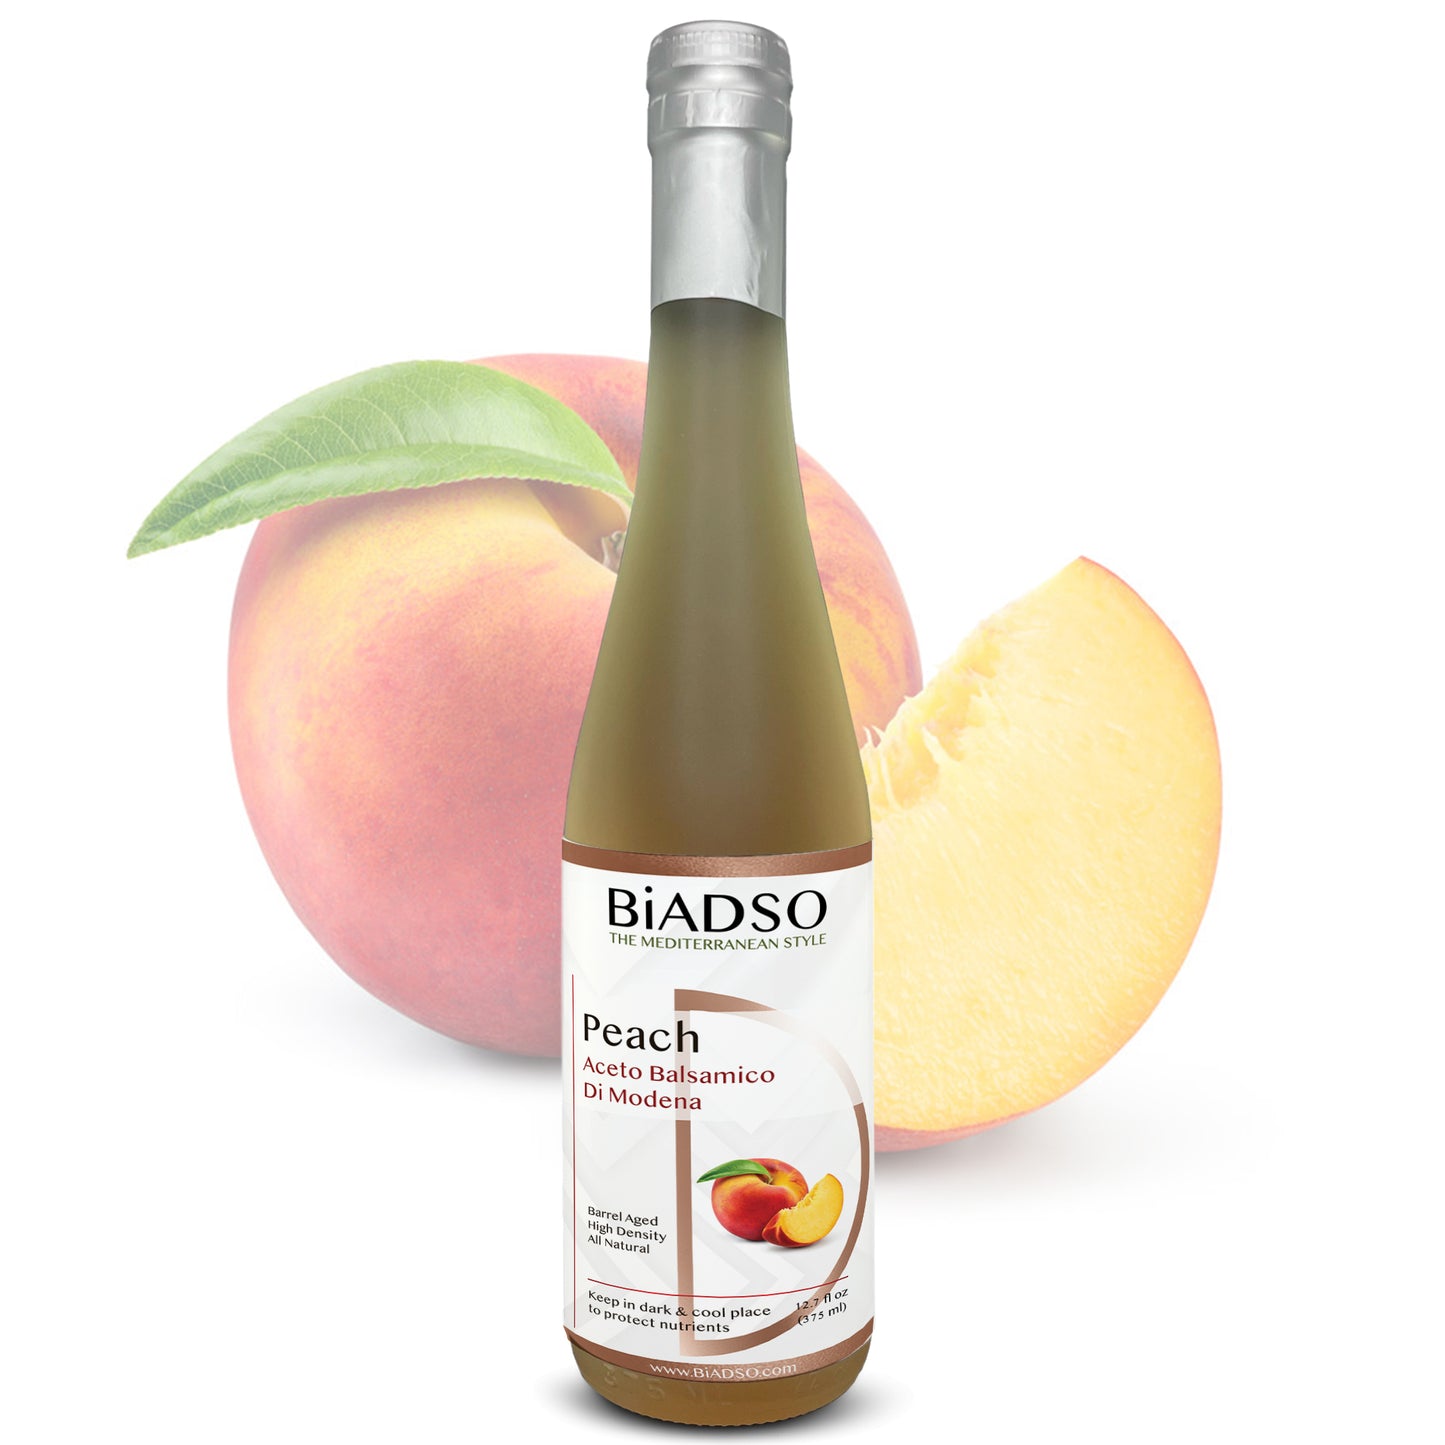 Peach White Balsamic Vinegar | Barrel Aged from Modena, ITALY